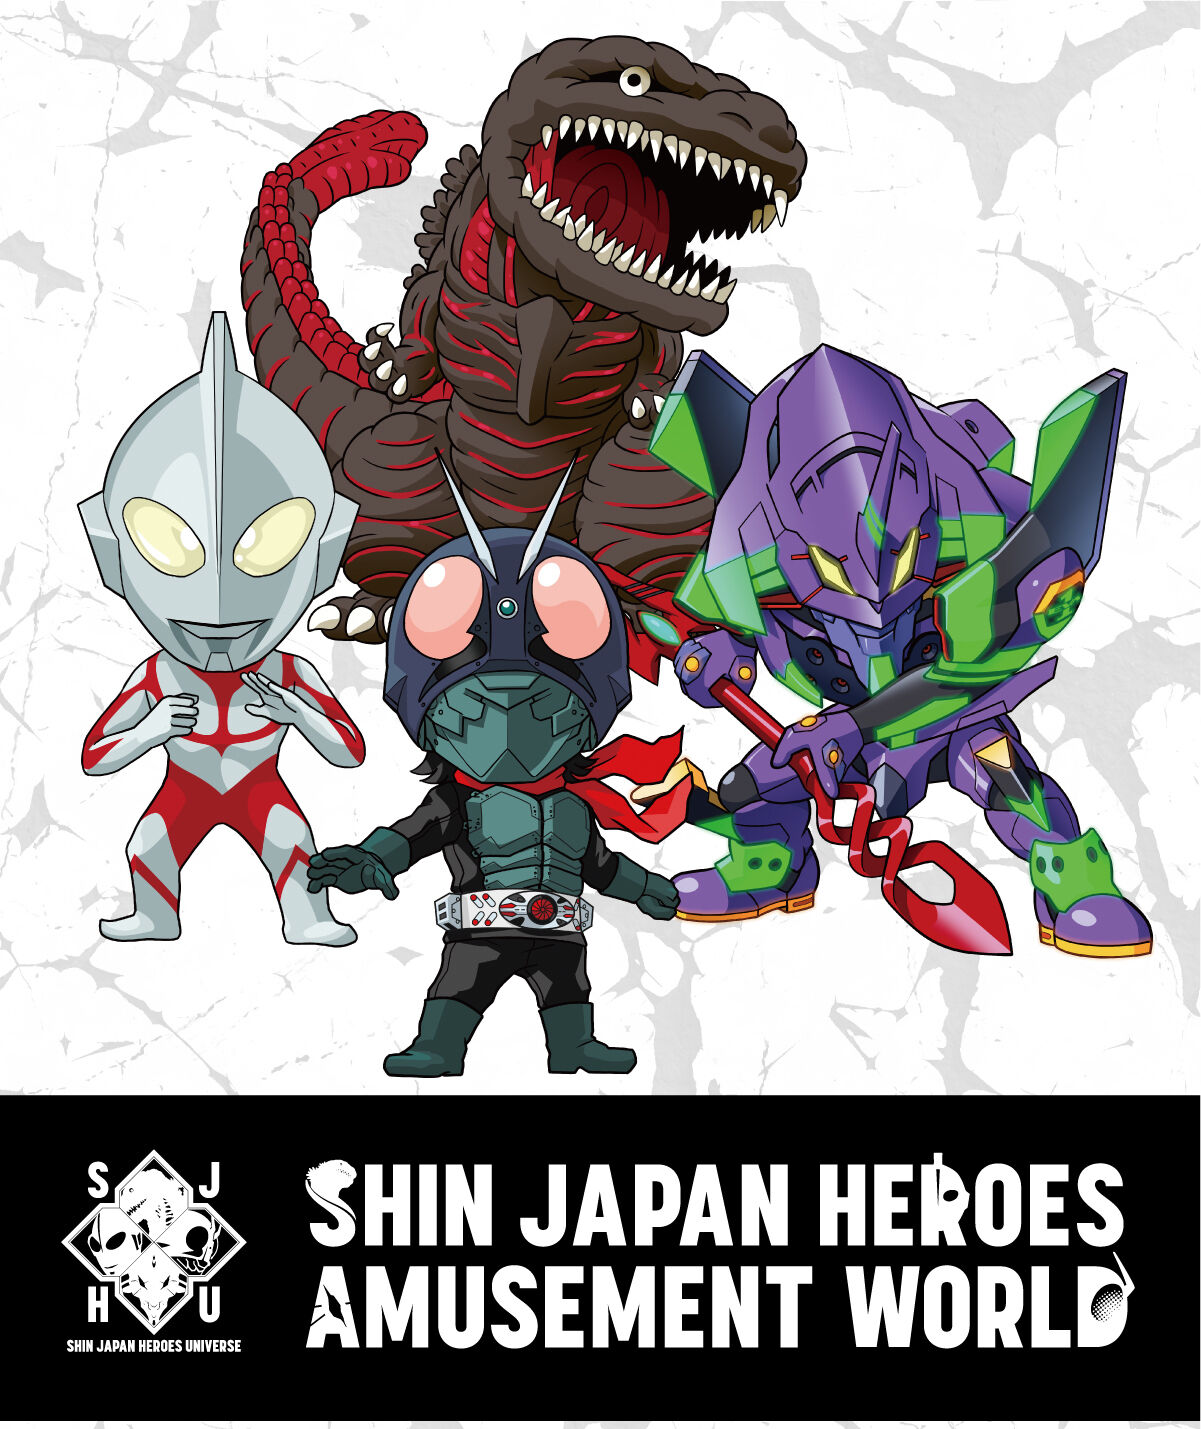 SHIN JAPAN HEROES AMUSEMENT WORLD